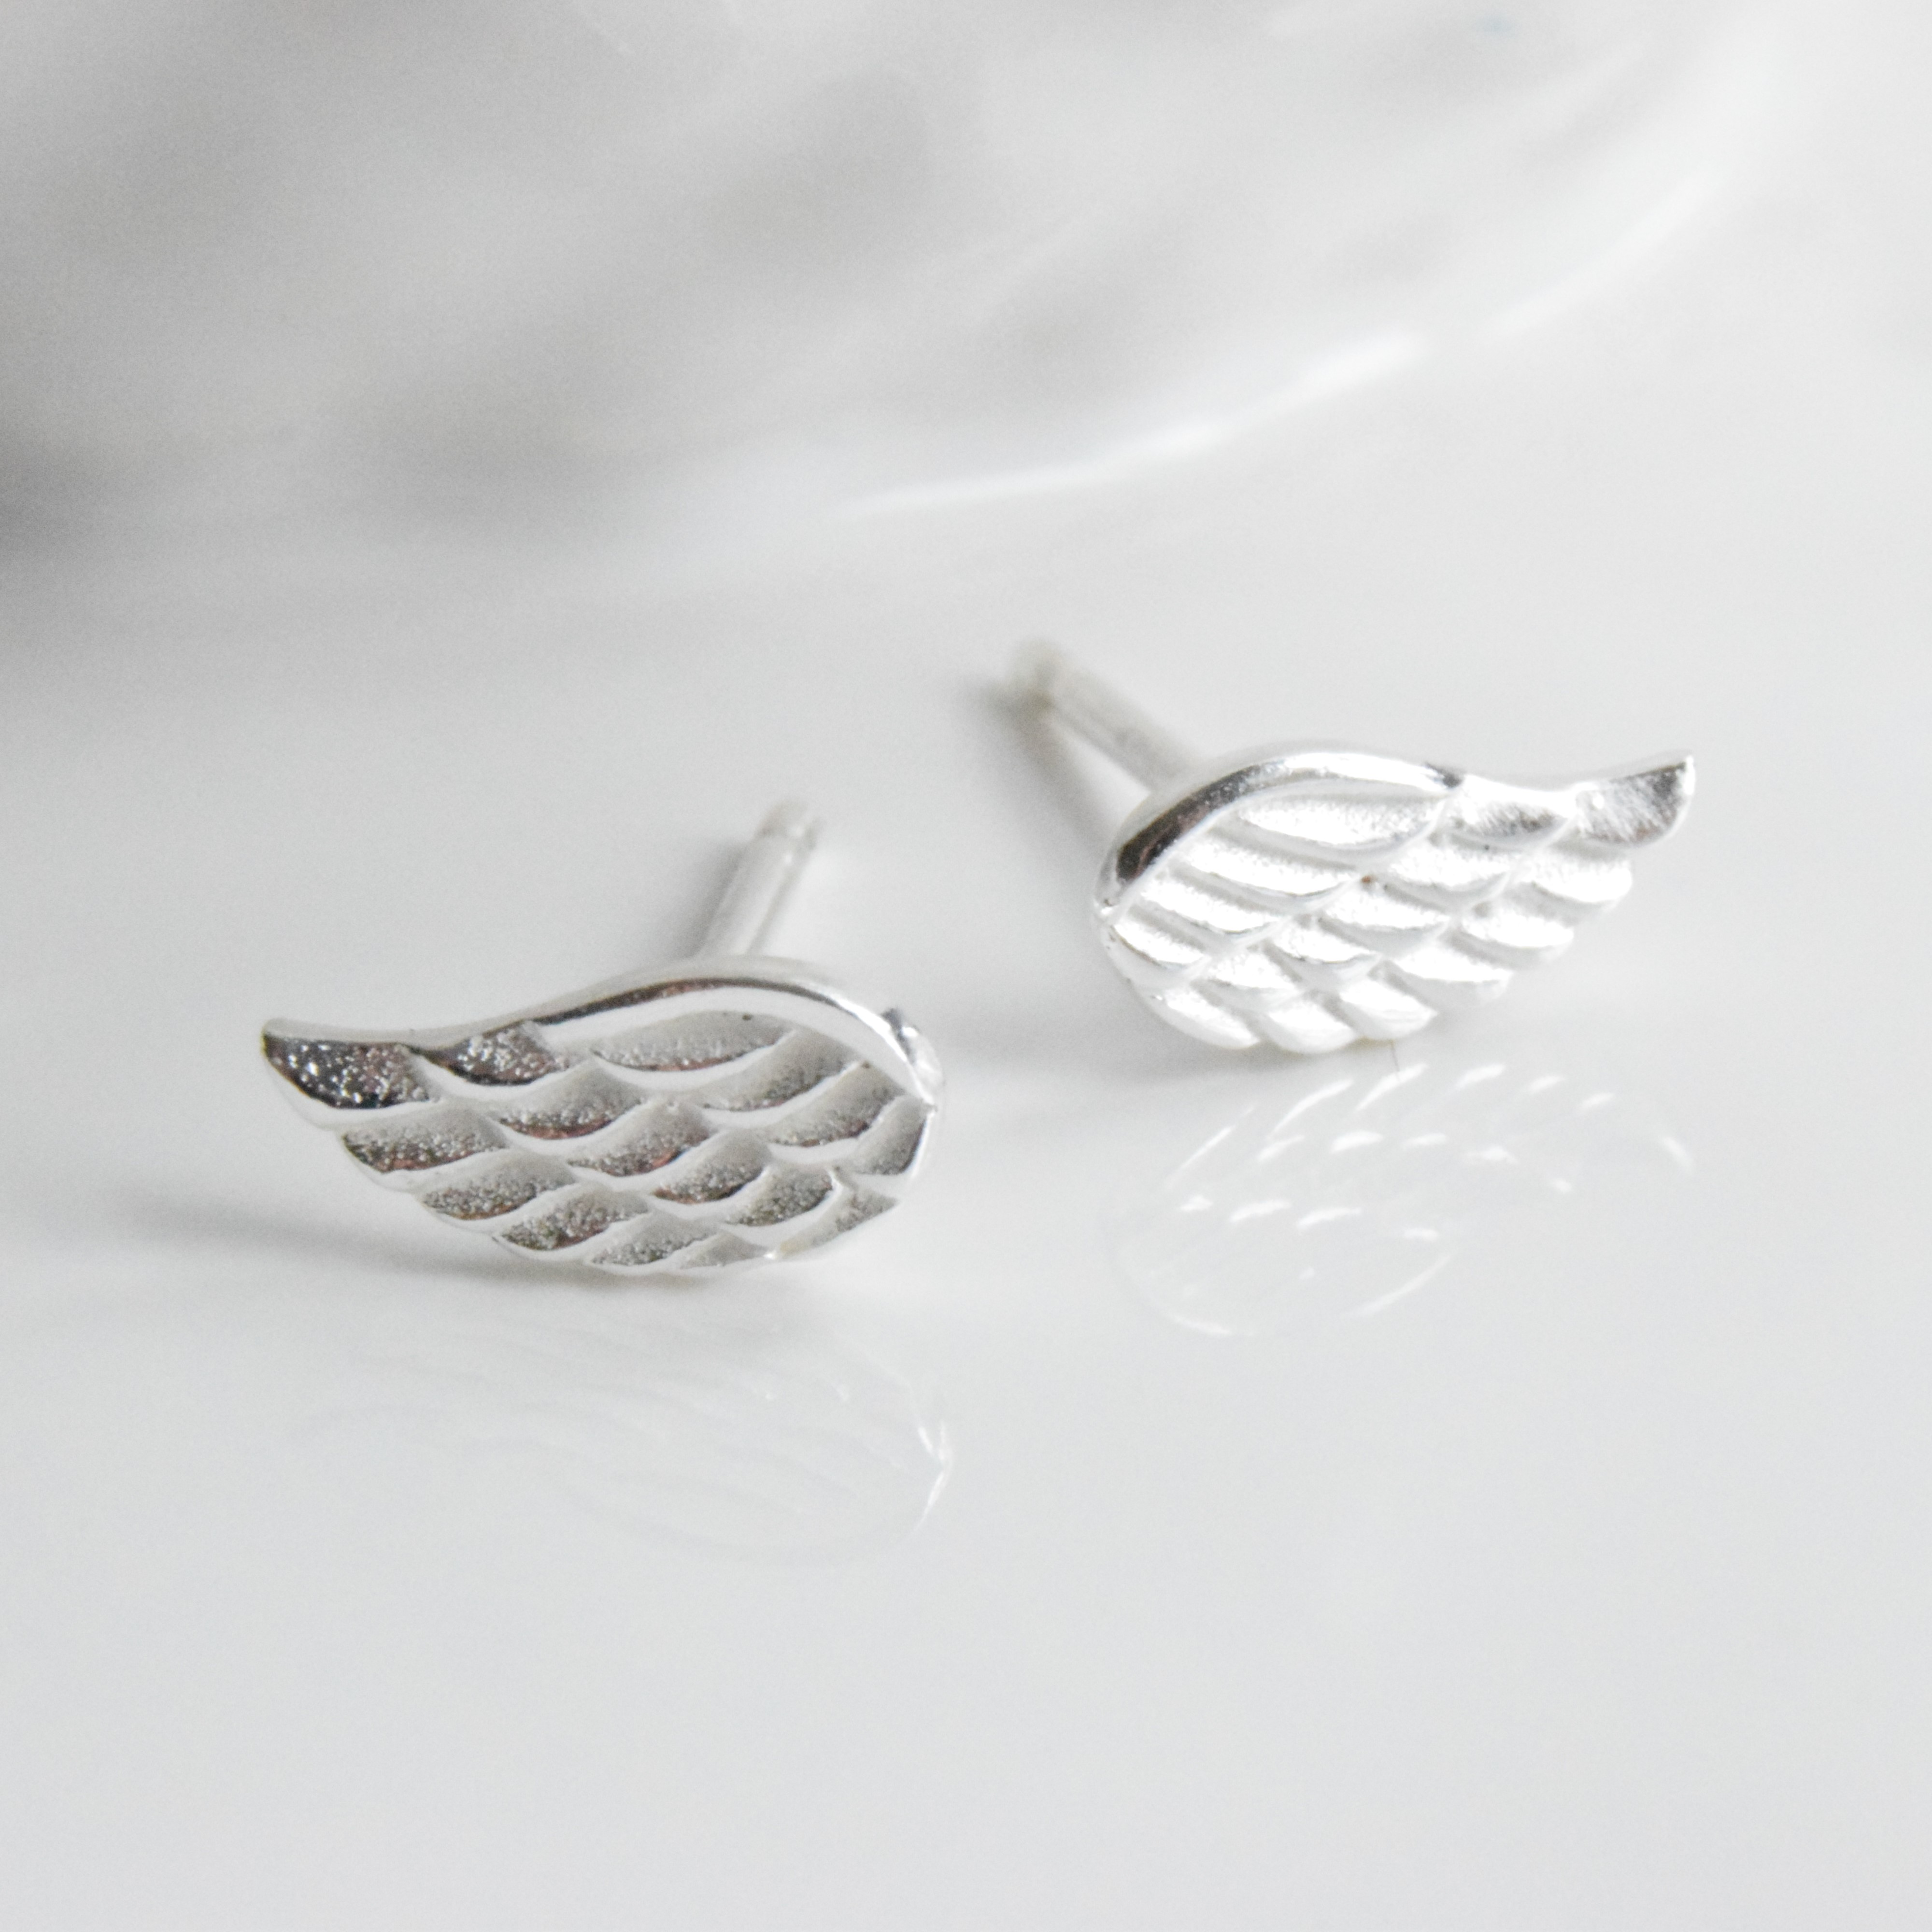 sterling silver angel wing earrings by yatris | notonthehighstreet.com